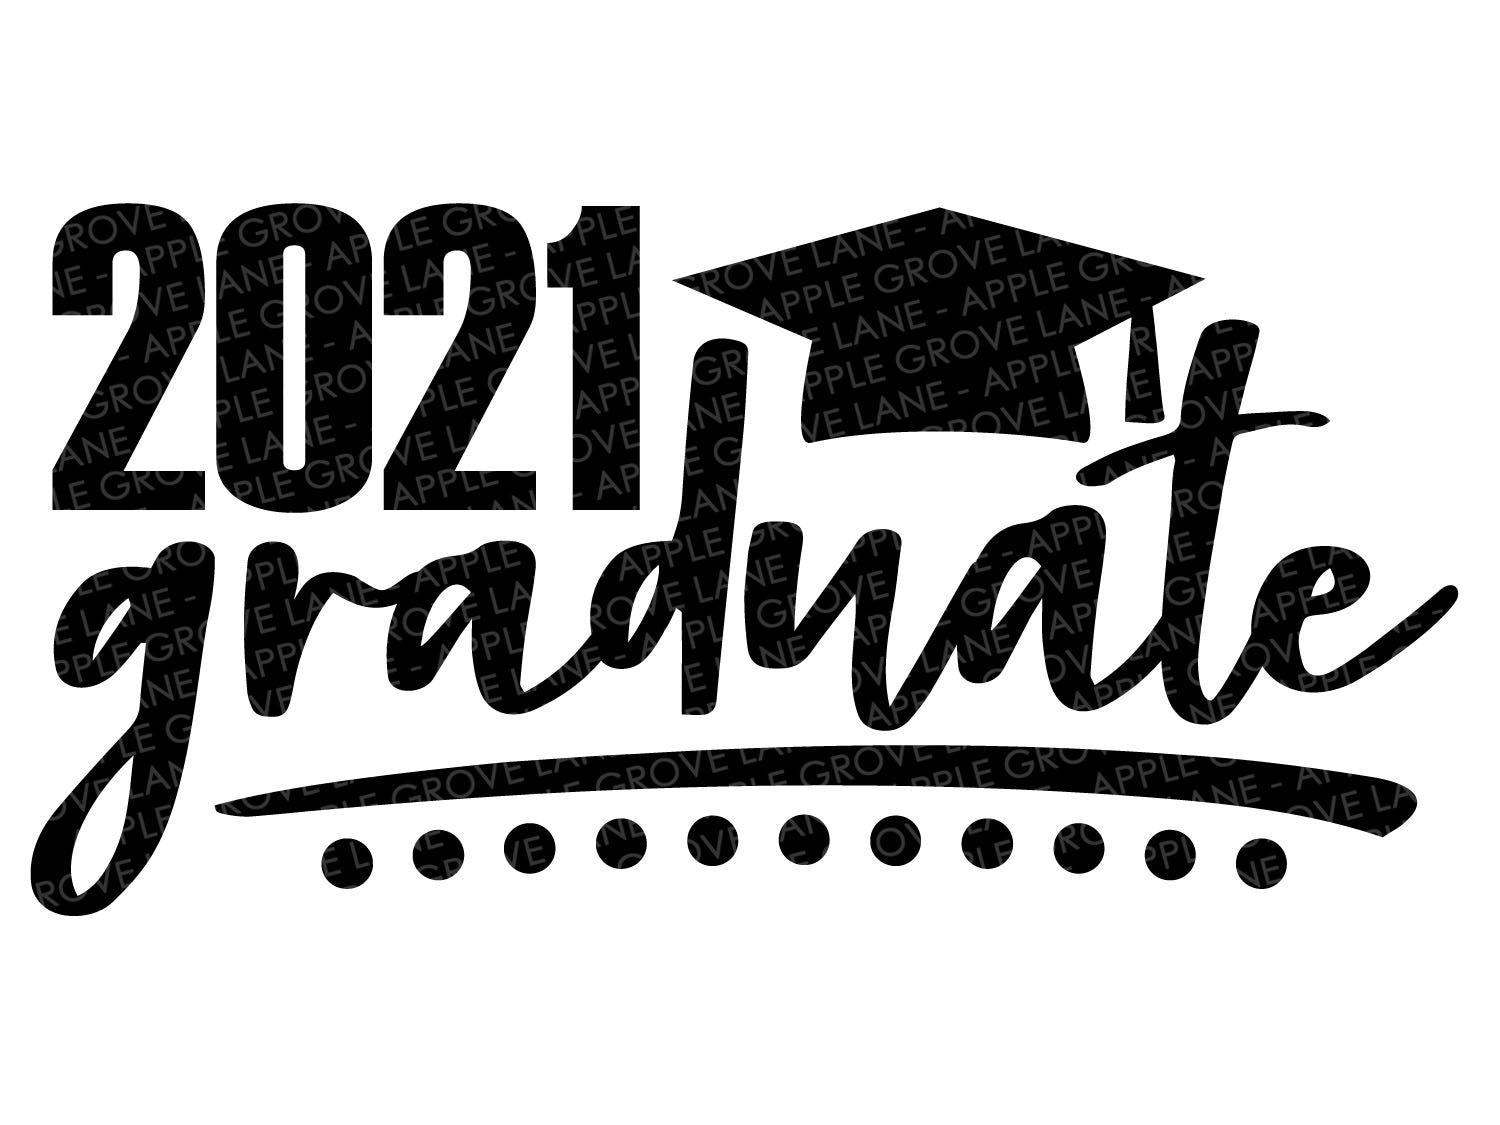 2021 Graduate Svg Class Of 2021 Svg 2021 Svg 2021 Graduation Svg Apple Grove Lane